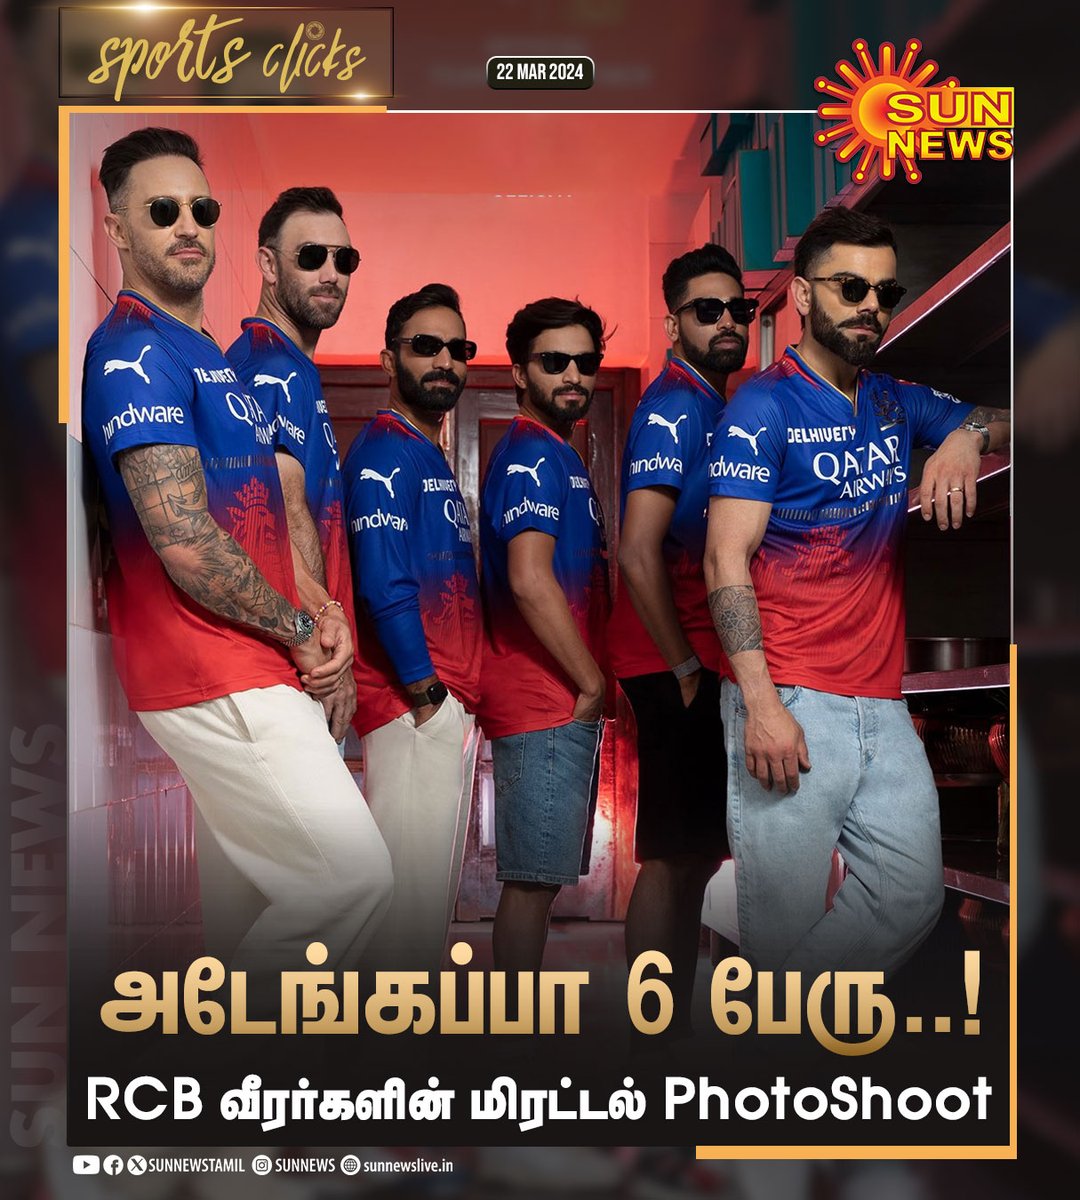 #SportsClicks | RCB வீரர்களின் மிரட்டல் PhotoShoot!

#SunNews | #RCB | #IPL2024